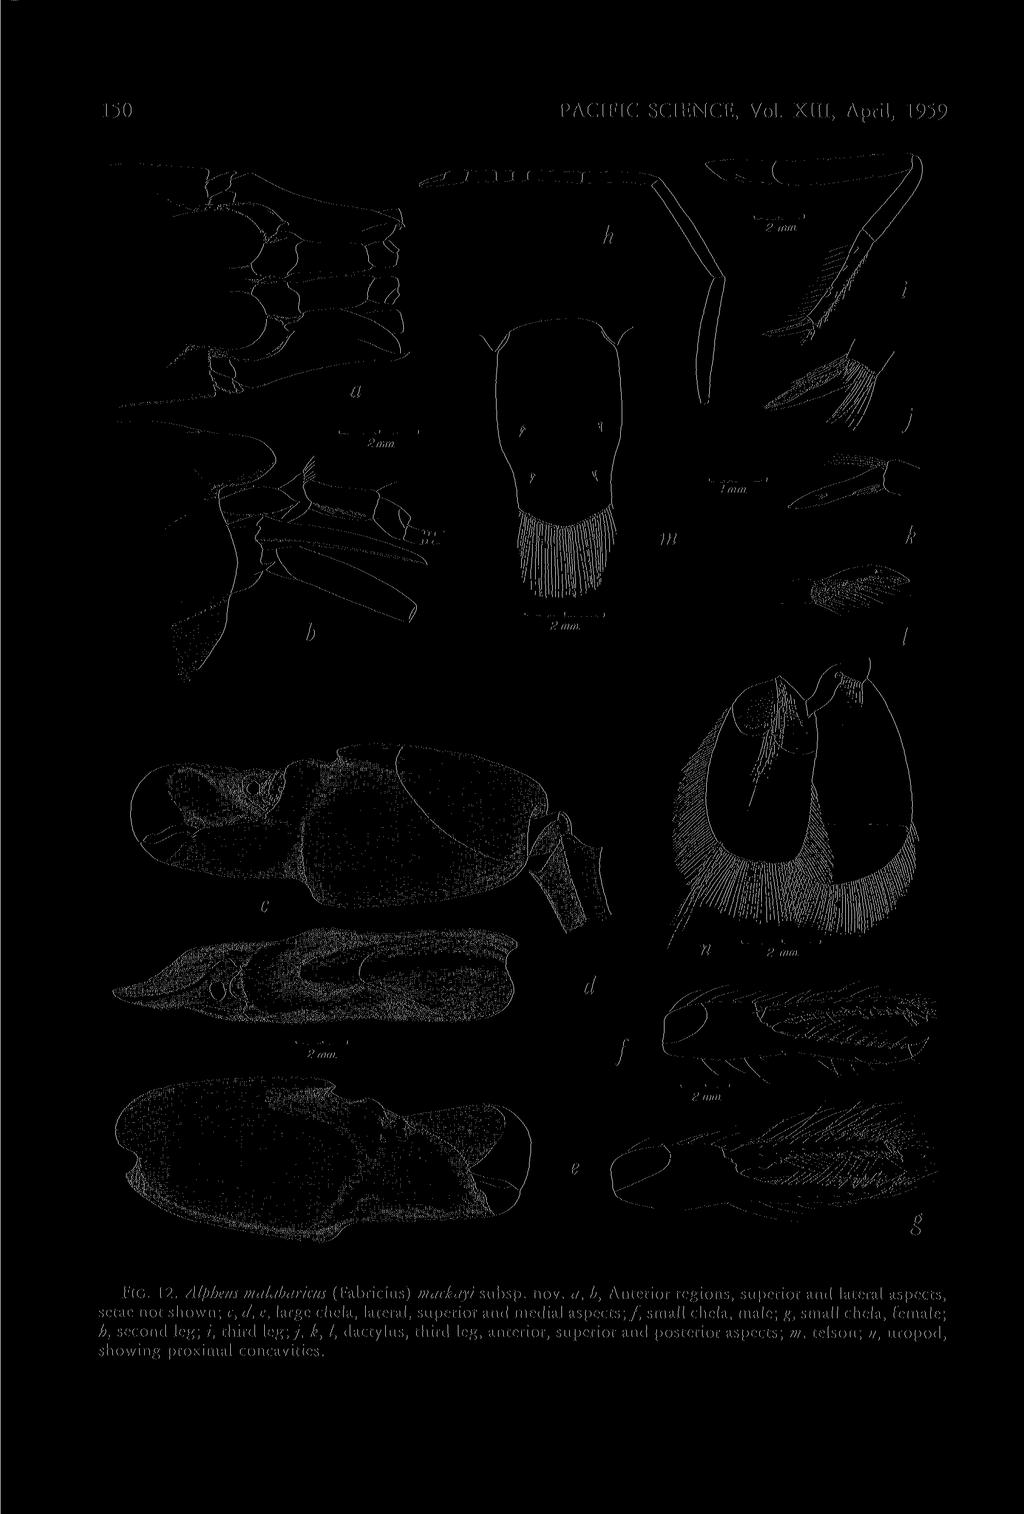 .150 PACIFIC SCIENCE, Vol. XIII, April, 1959 FIG. 12. Alpheus malabarichs (Fabricius) mackayi subsp. nov.